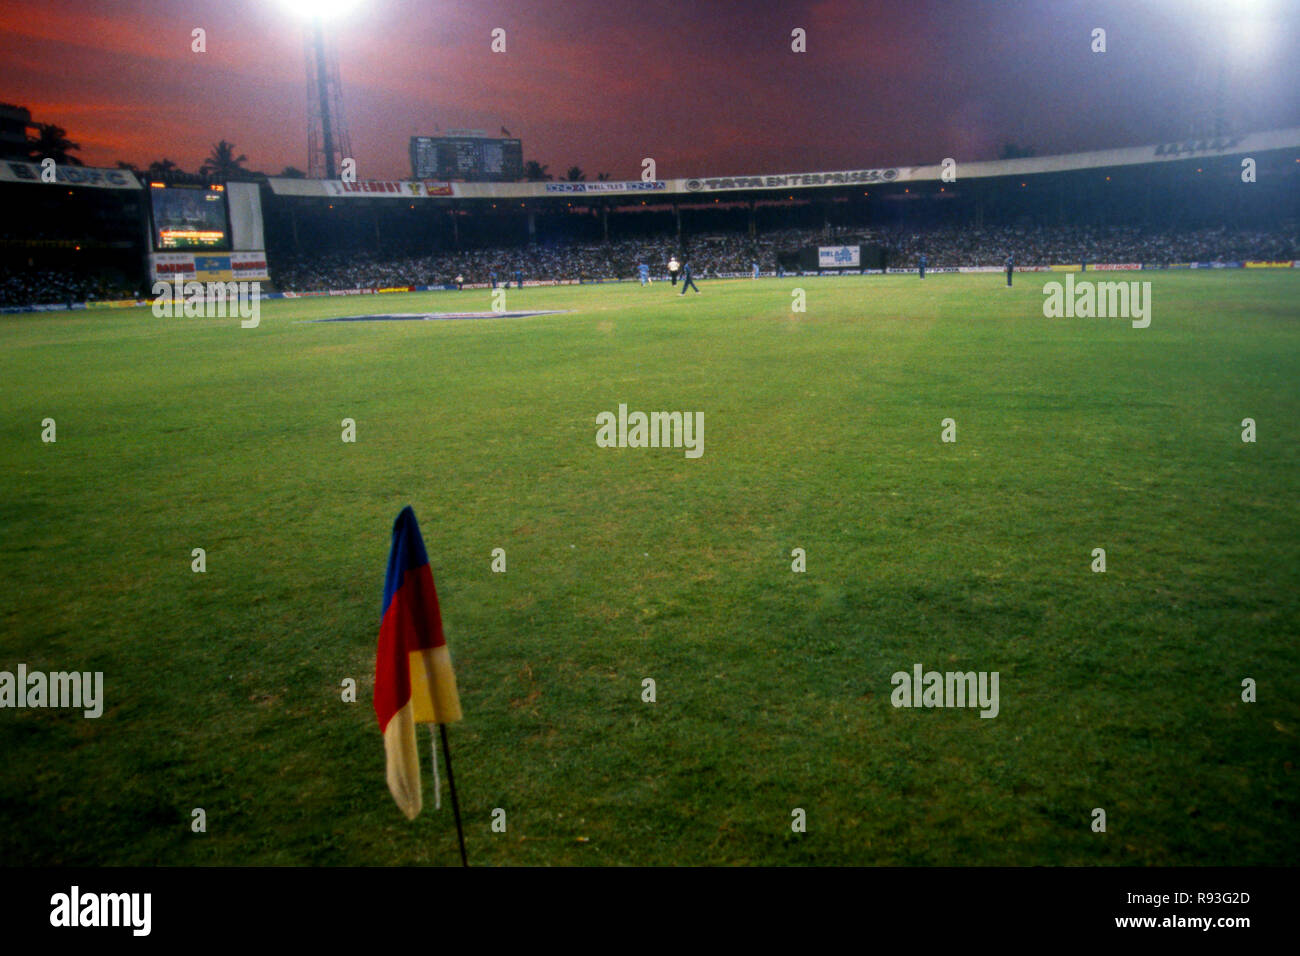 Wankhede stadium at night during cricket match Stock Photo